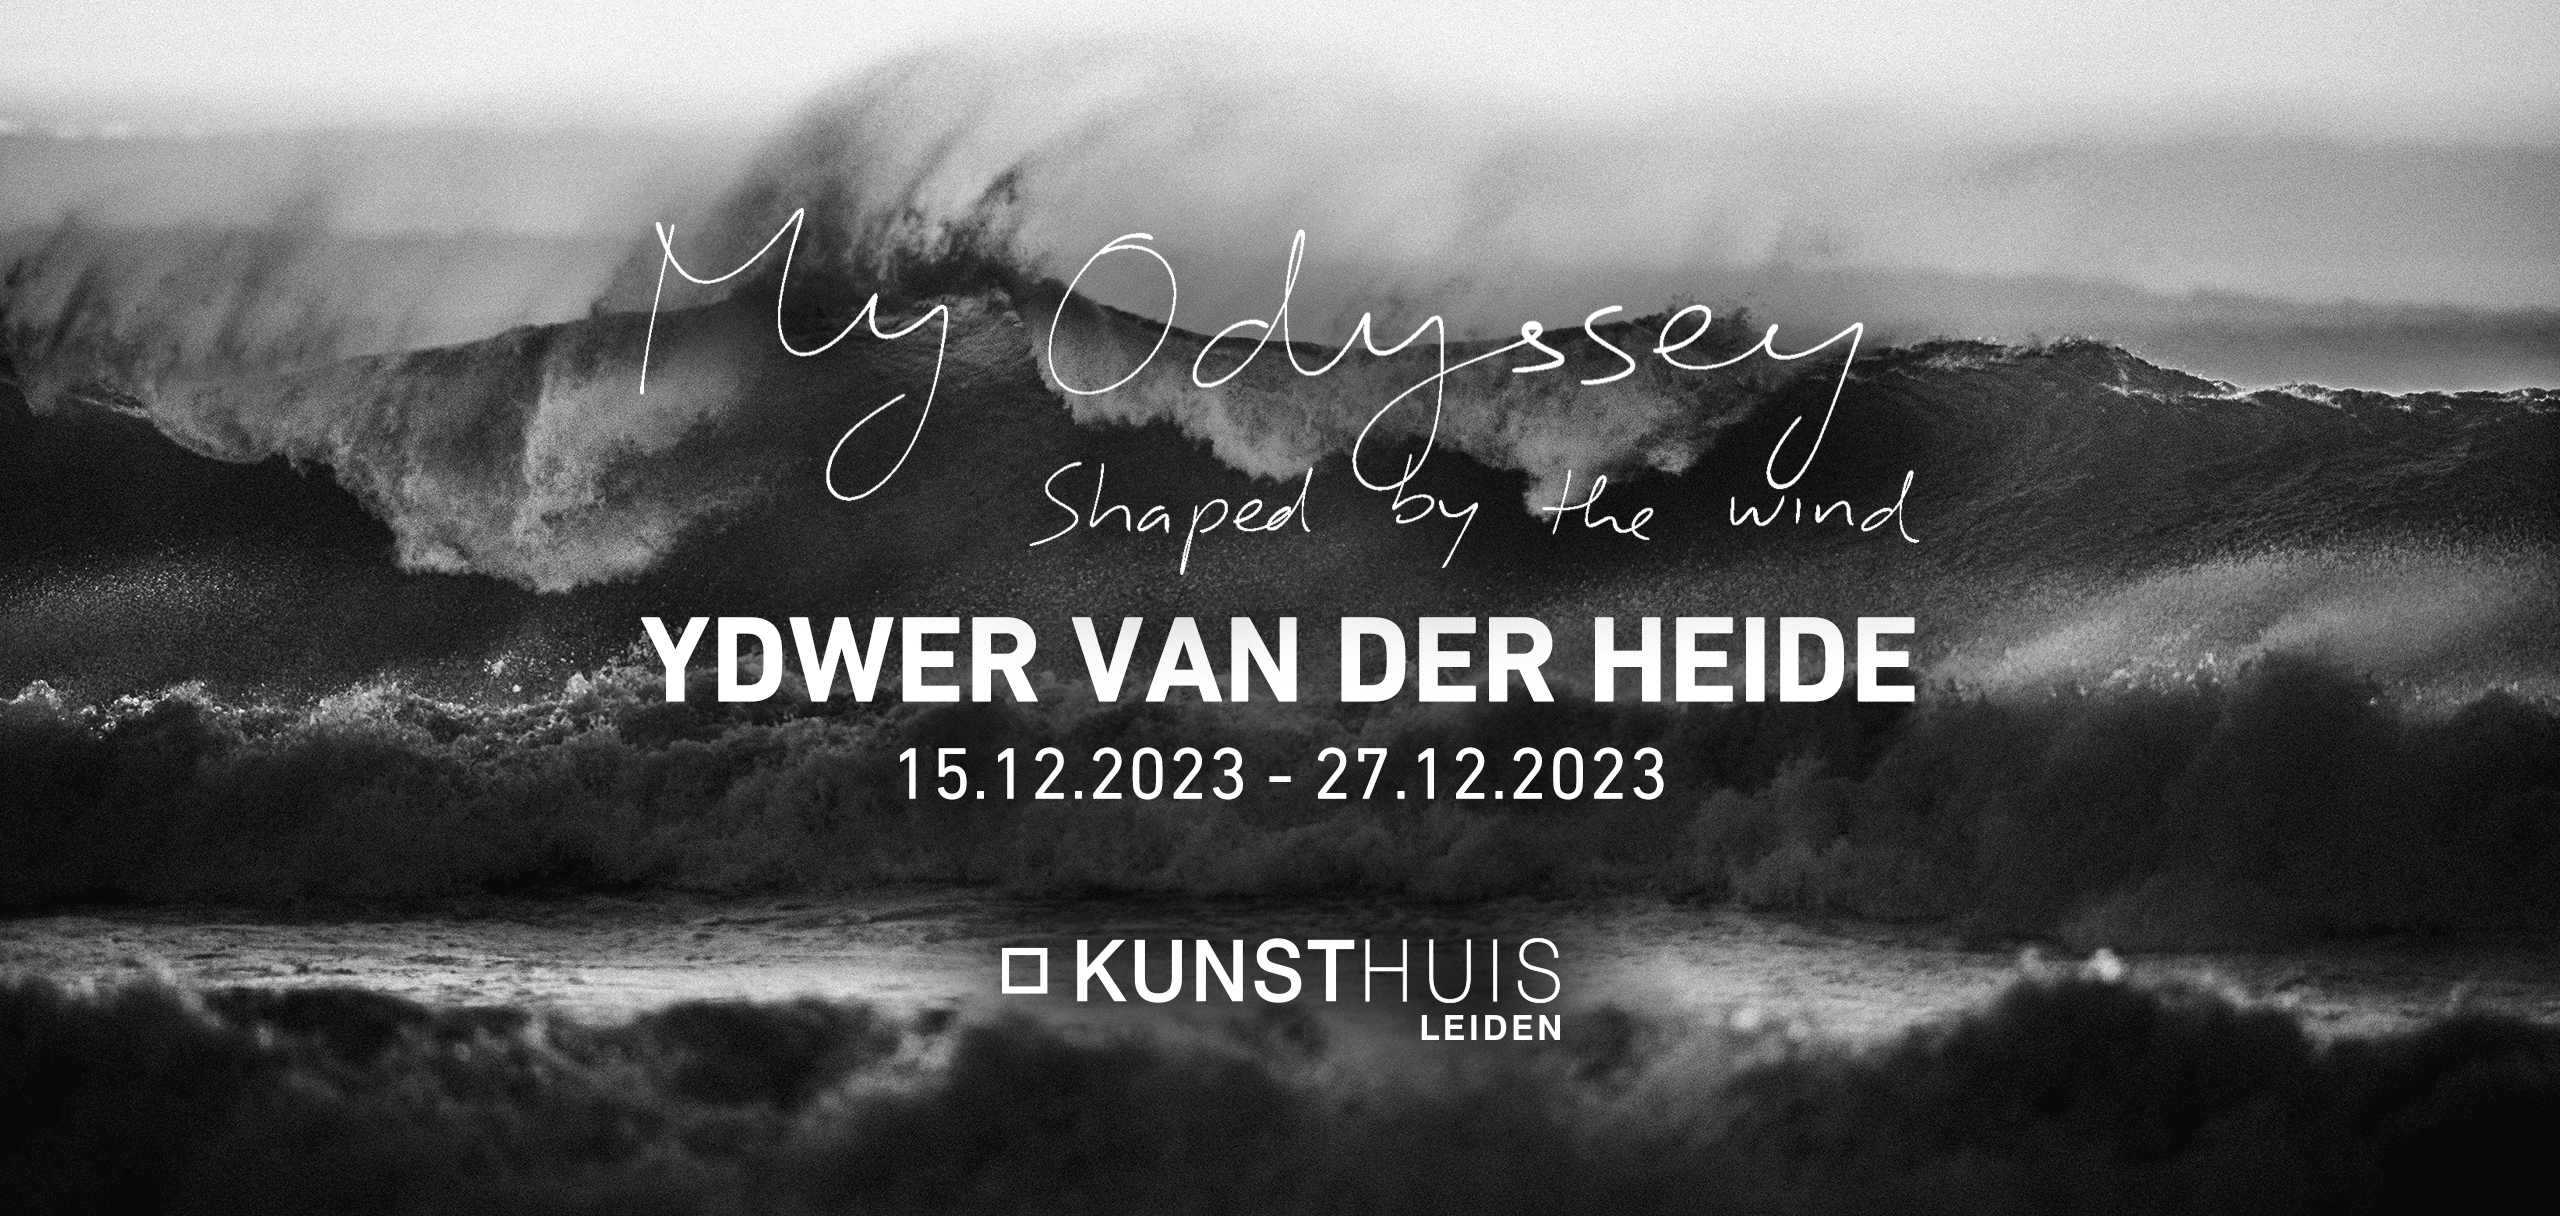 Ydwer van der Heide – My Odyssey, Shaped by the Wind